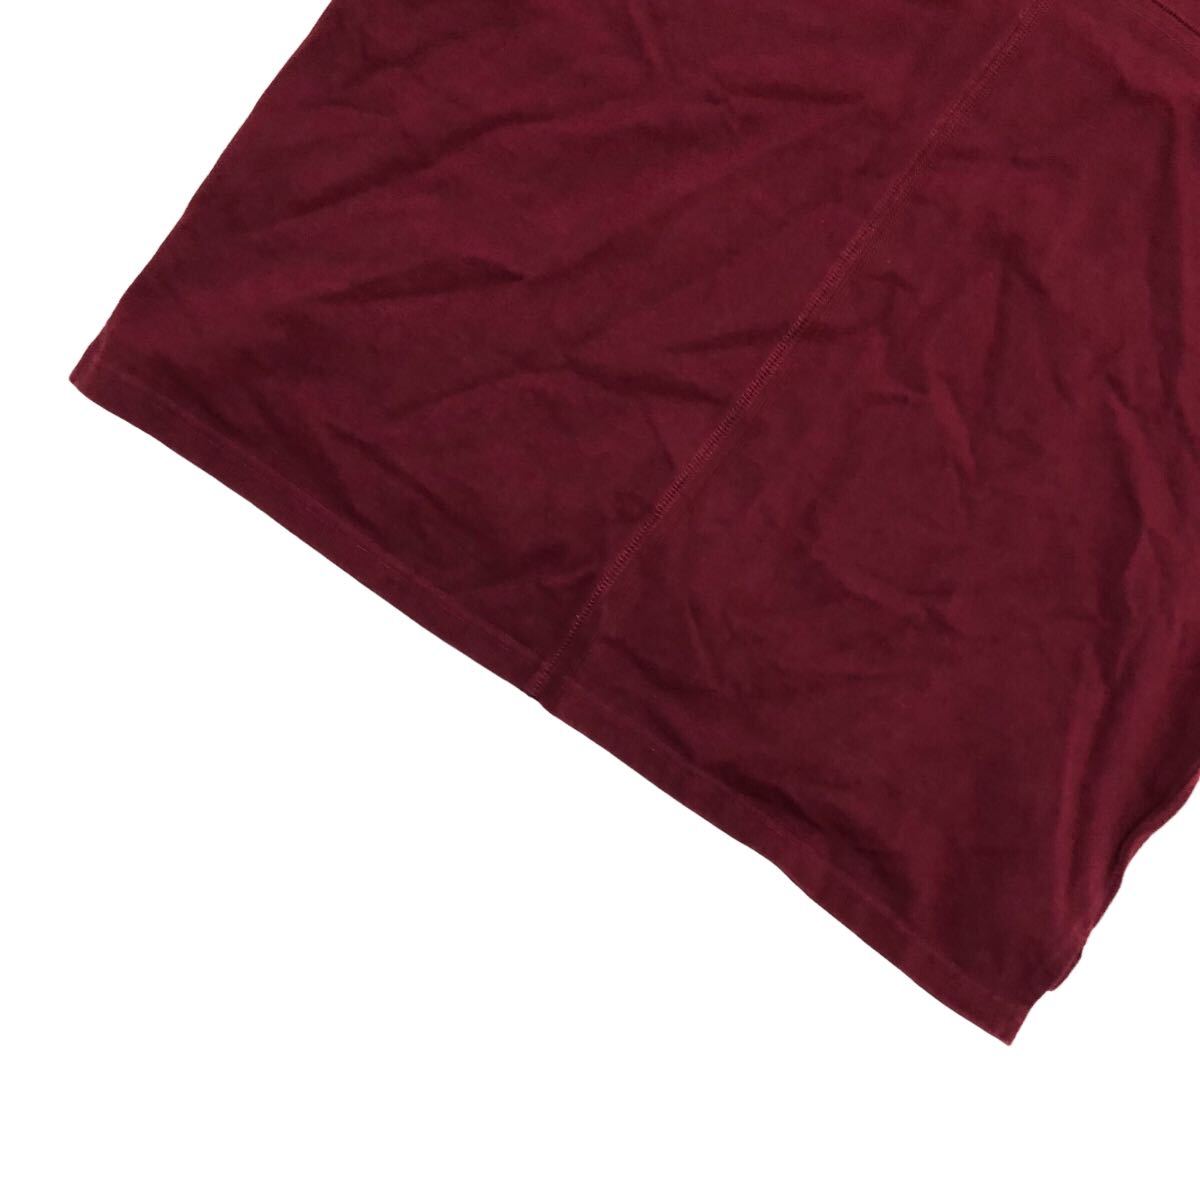 S206 AVIREX Belle Avirex bell футболка короткий рукав футболка tops большой Silhouette хлопок 100% женский F красный красный 